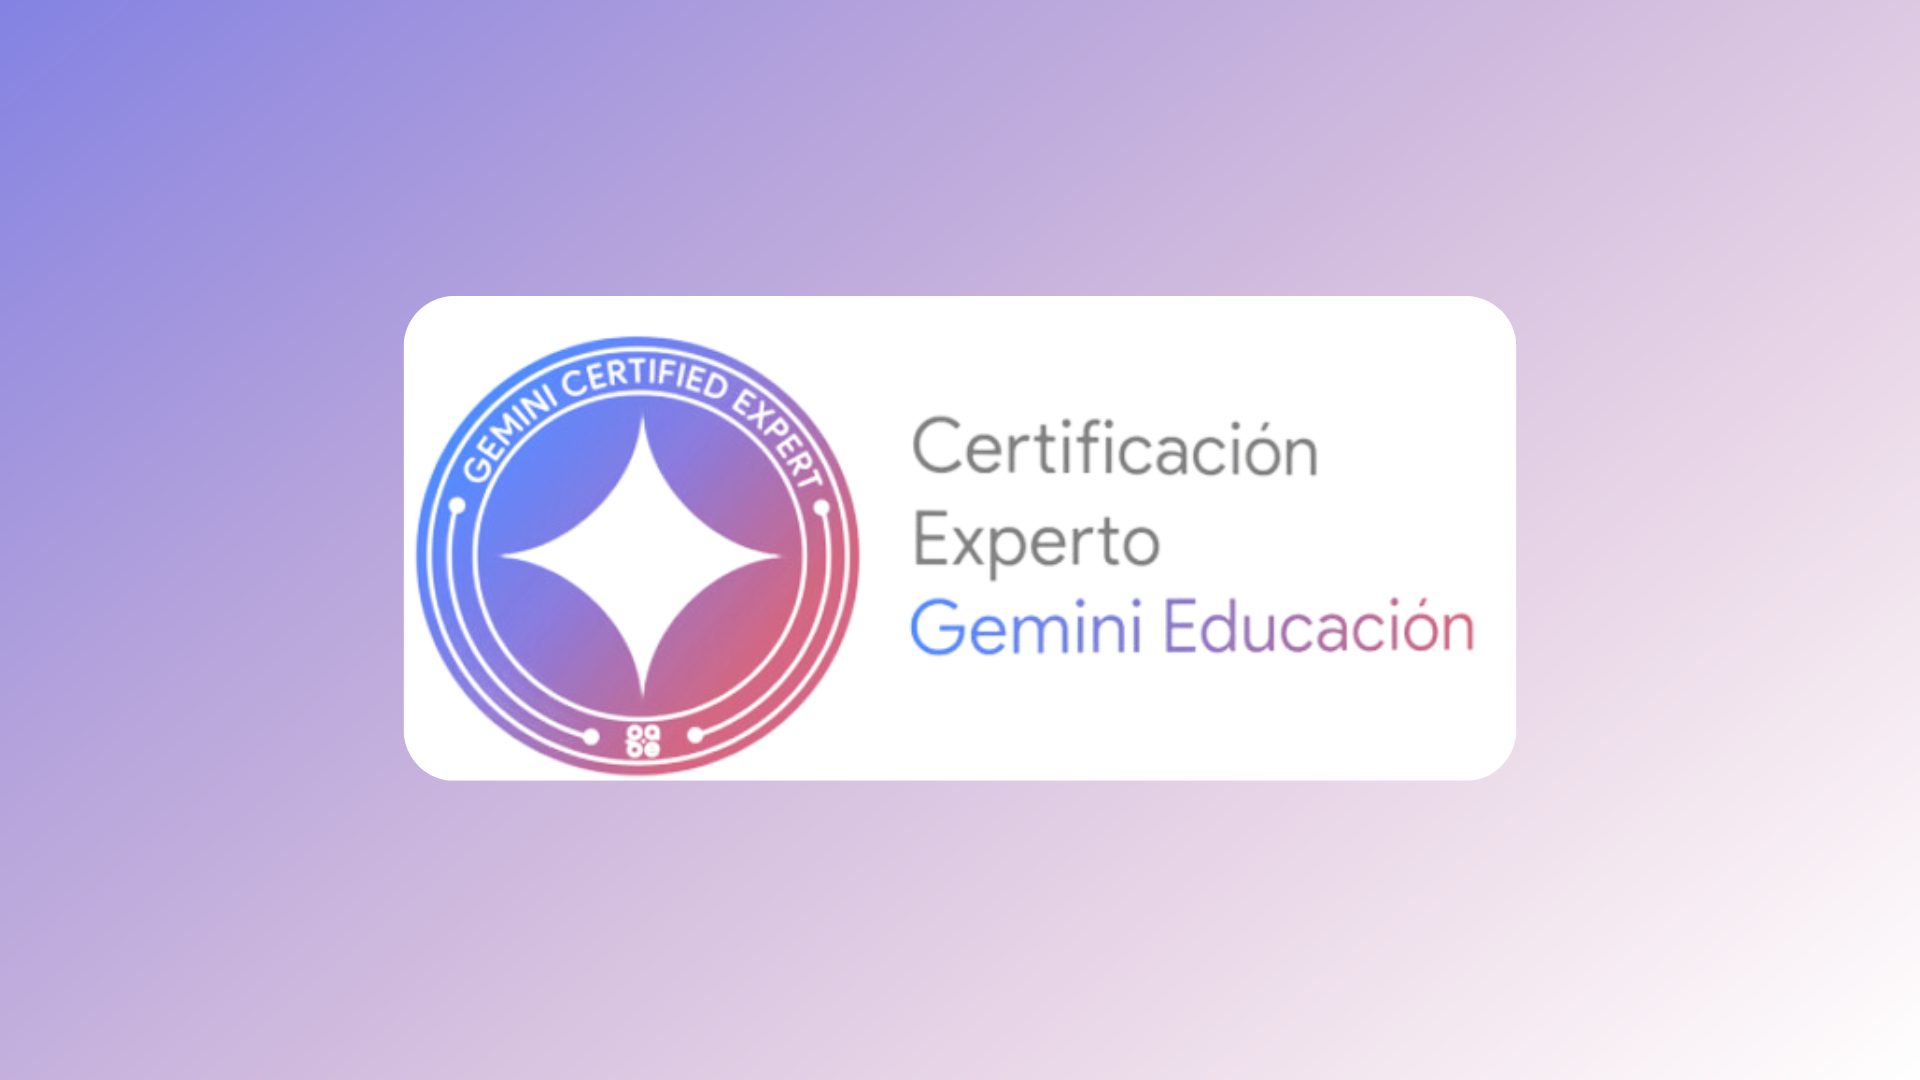 ¡Potencia tu enseñanza con Gemini Education!